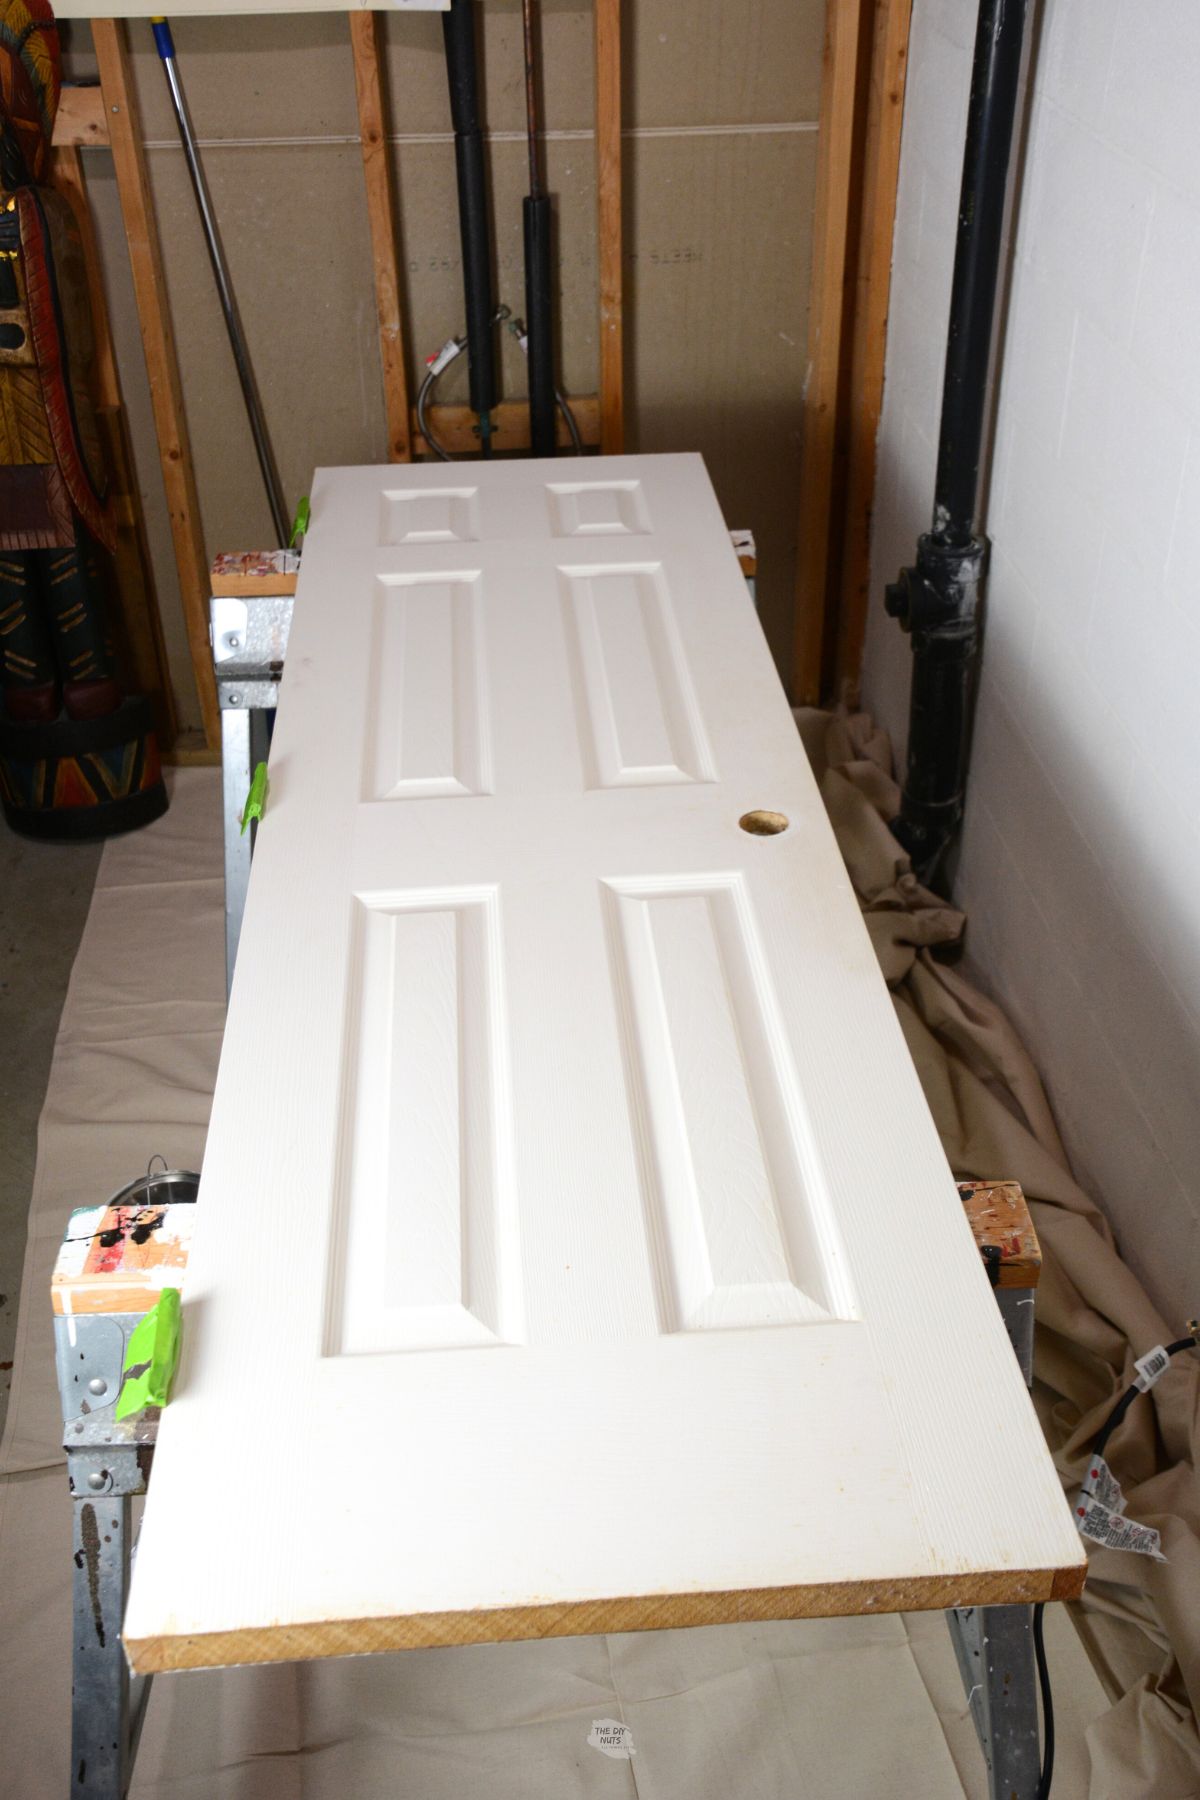 white/cream colored door on sawhorses in basement corner.